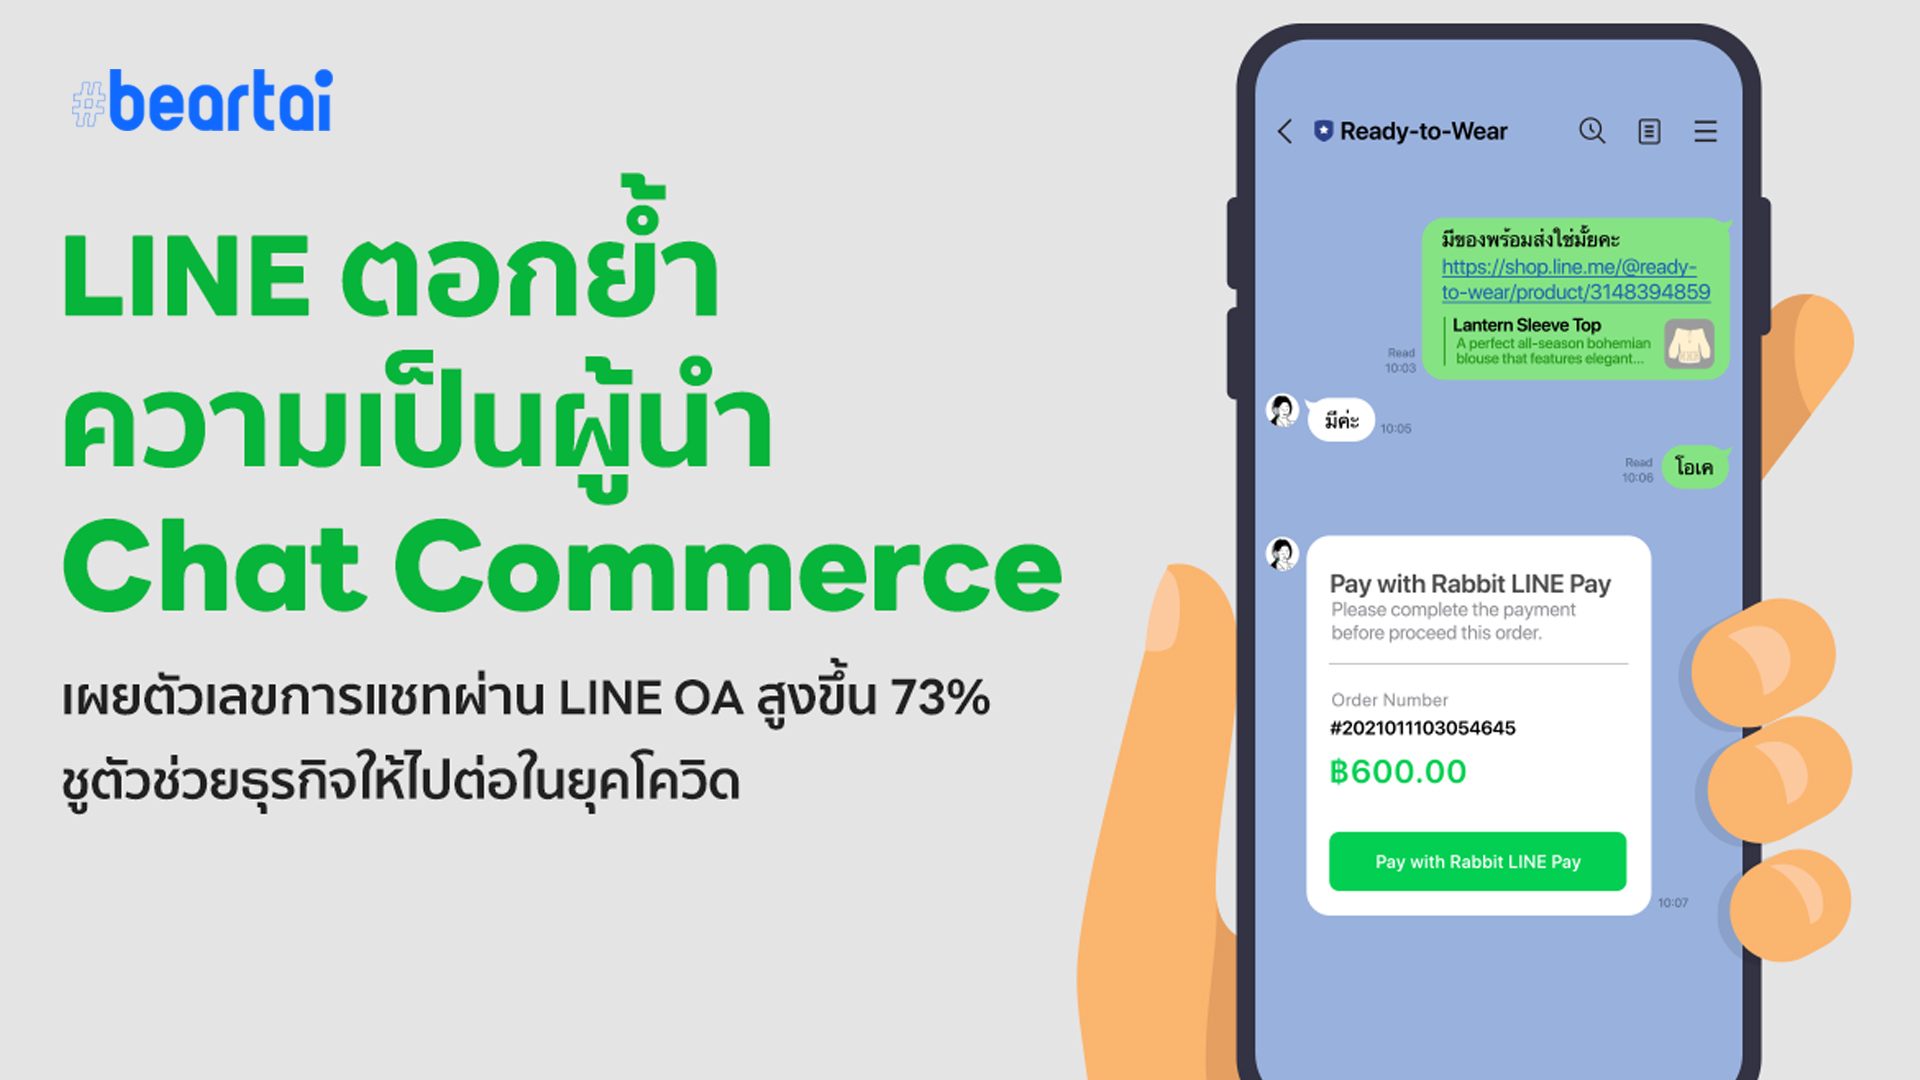 LINE ตอกย้ำความเป็นผู้นำ “Chat Commerce” เผยตัวเลขการแชทผ่าน LINE OA สูงขึ้น 73%